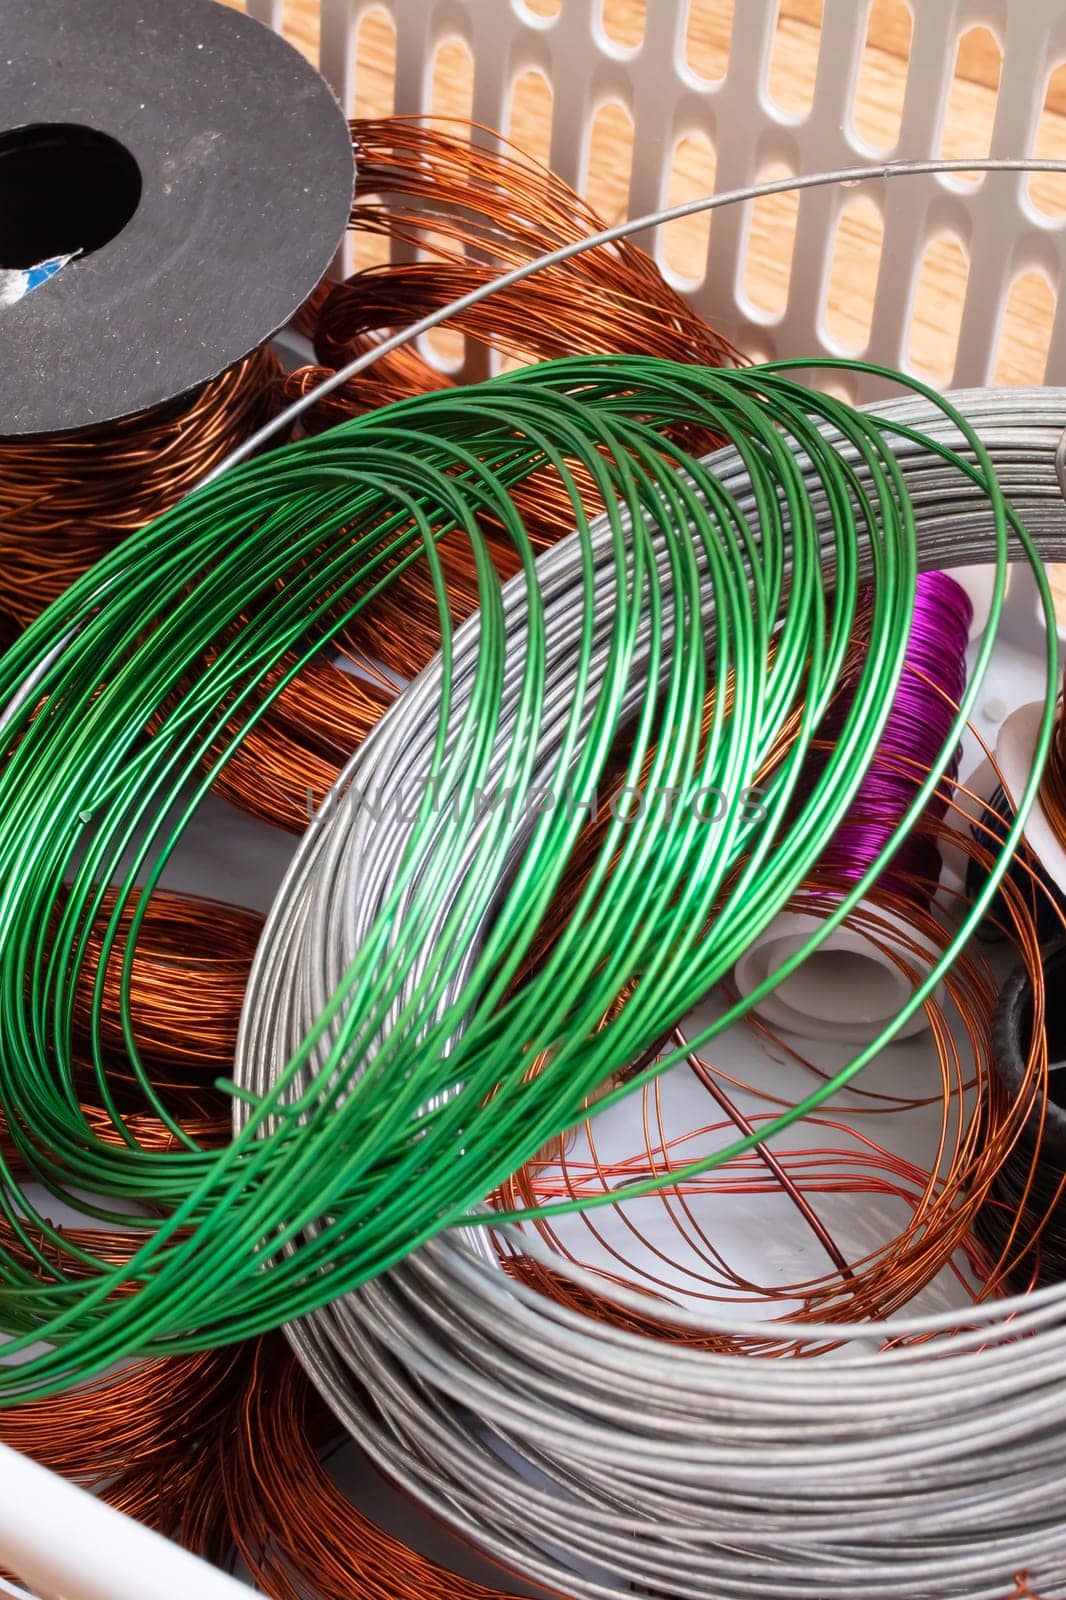 Copper wire coils in a plastic basket by Vera1703